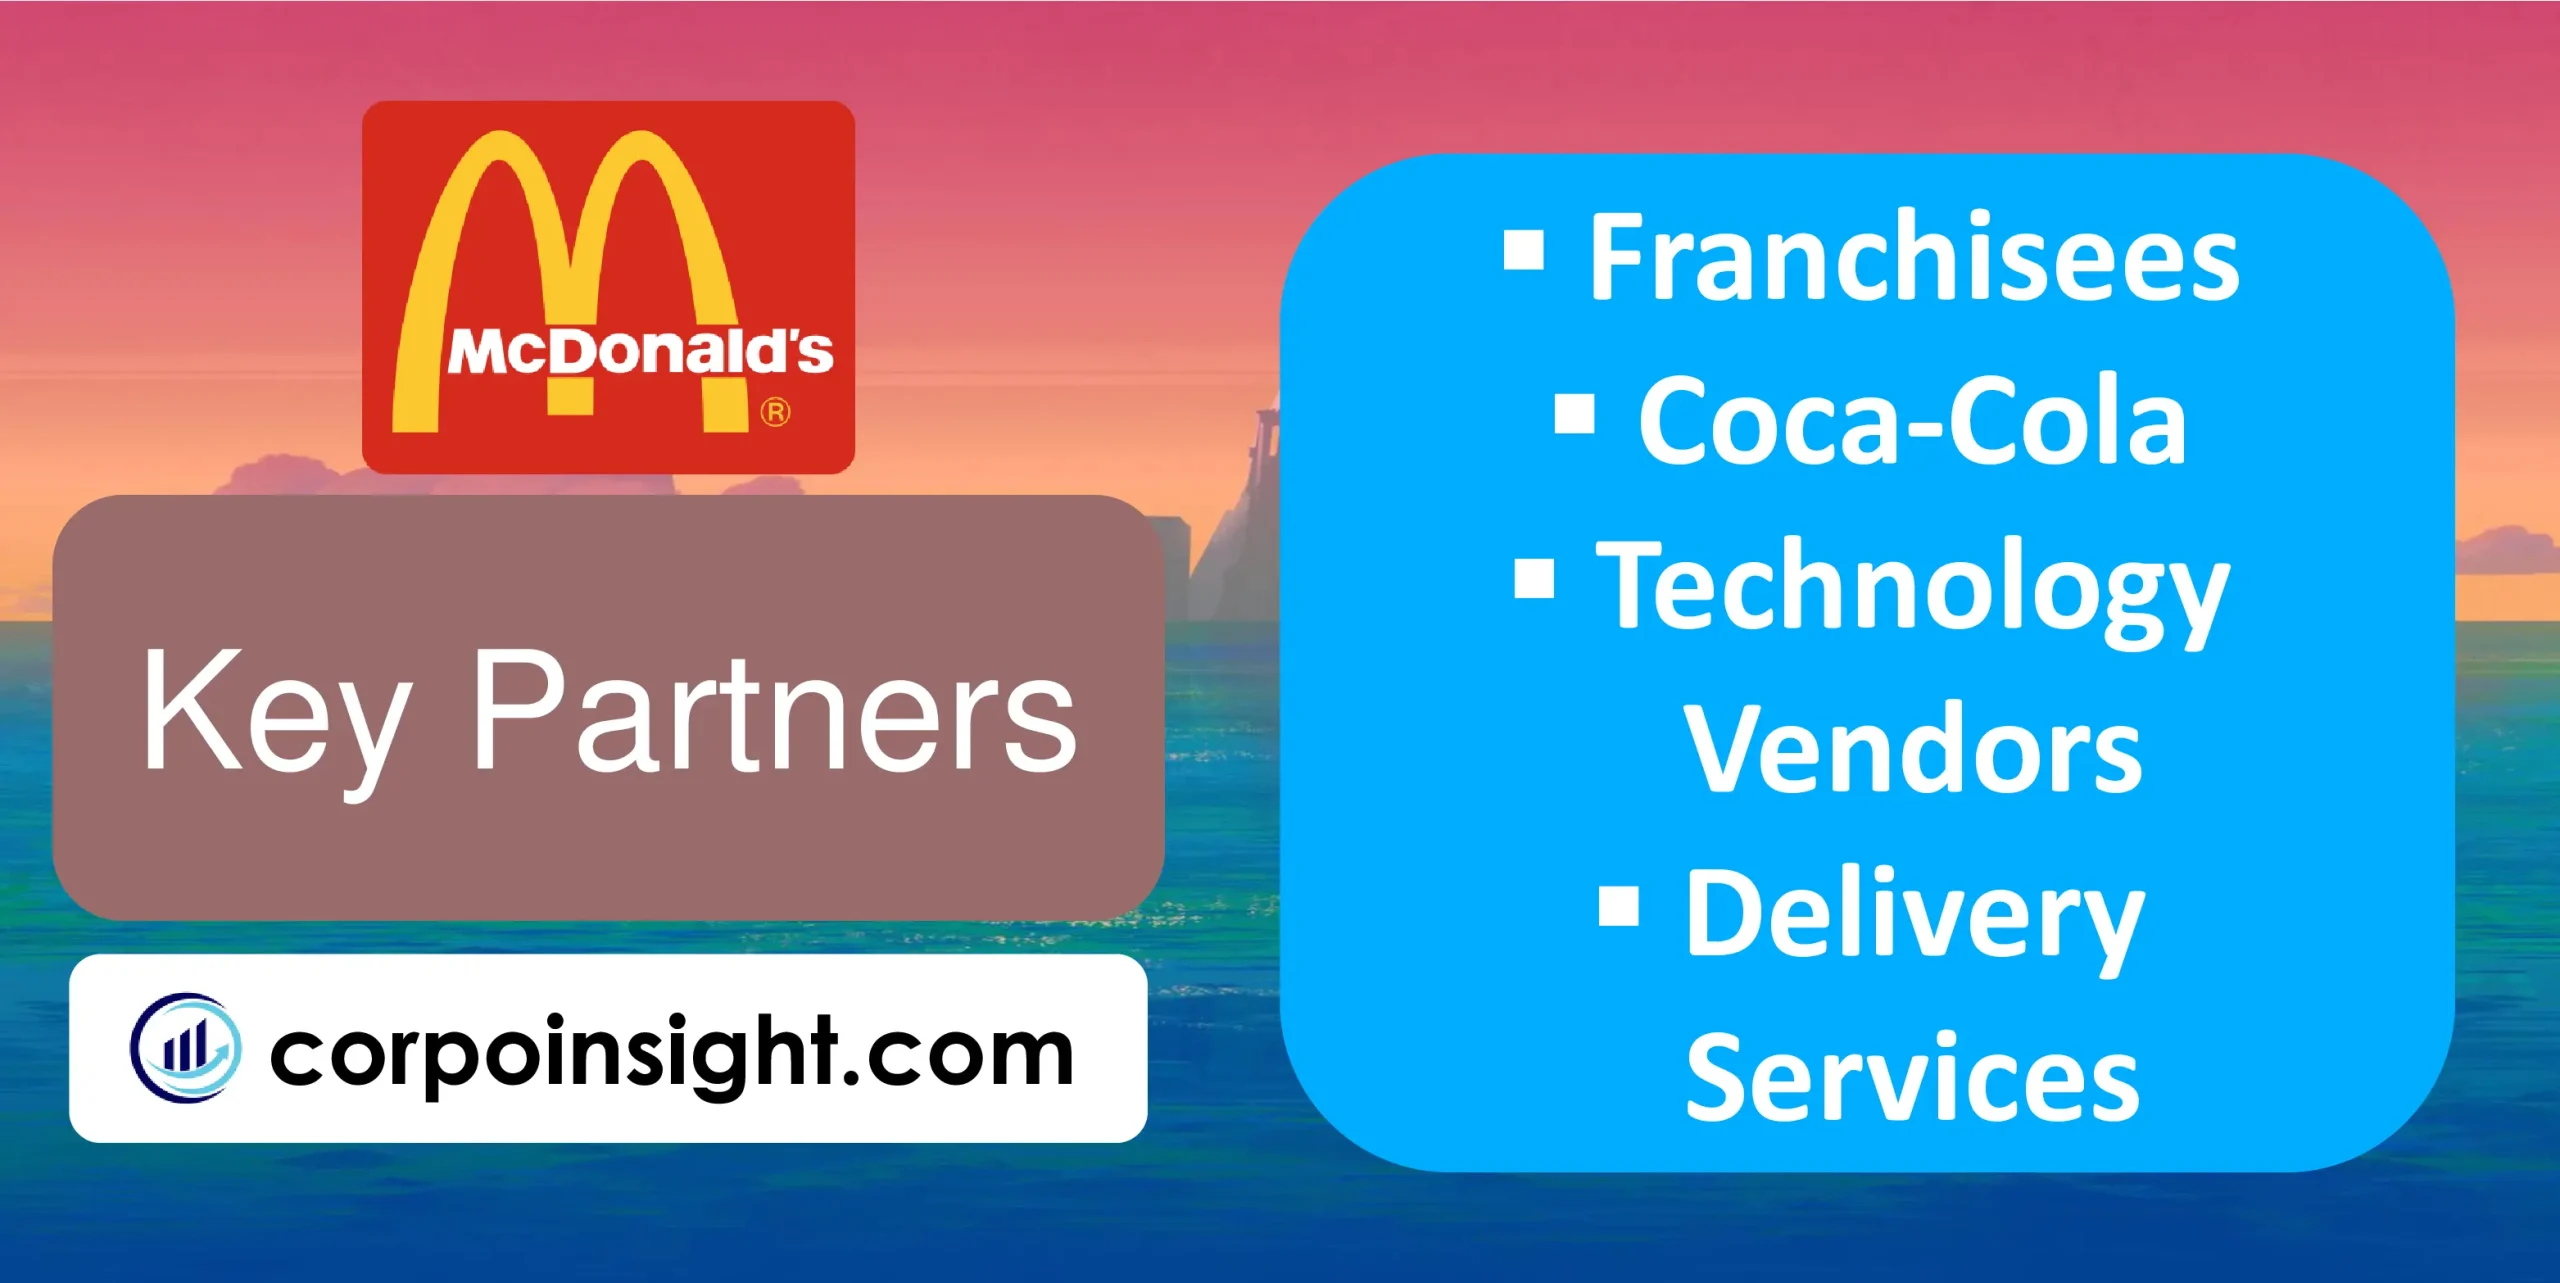 Key Partners of McDonald's